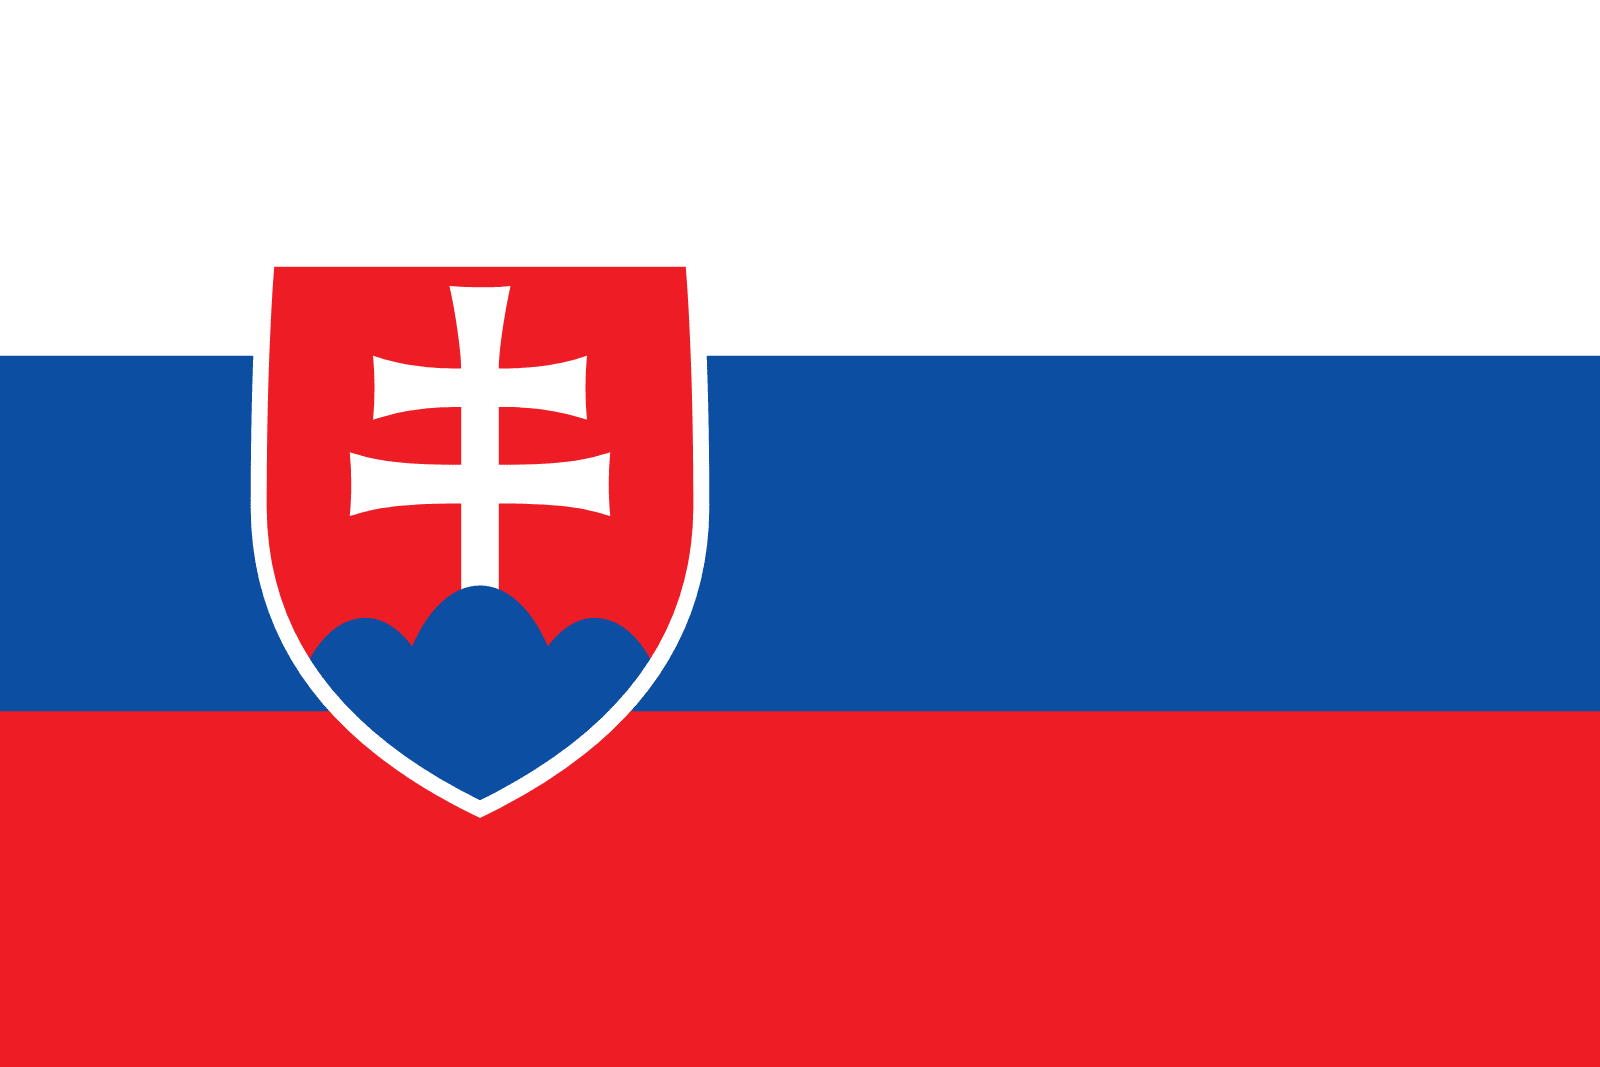 Flagge der Slowakei | Welt-Flaggen.de